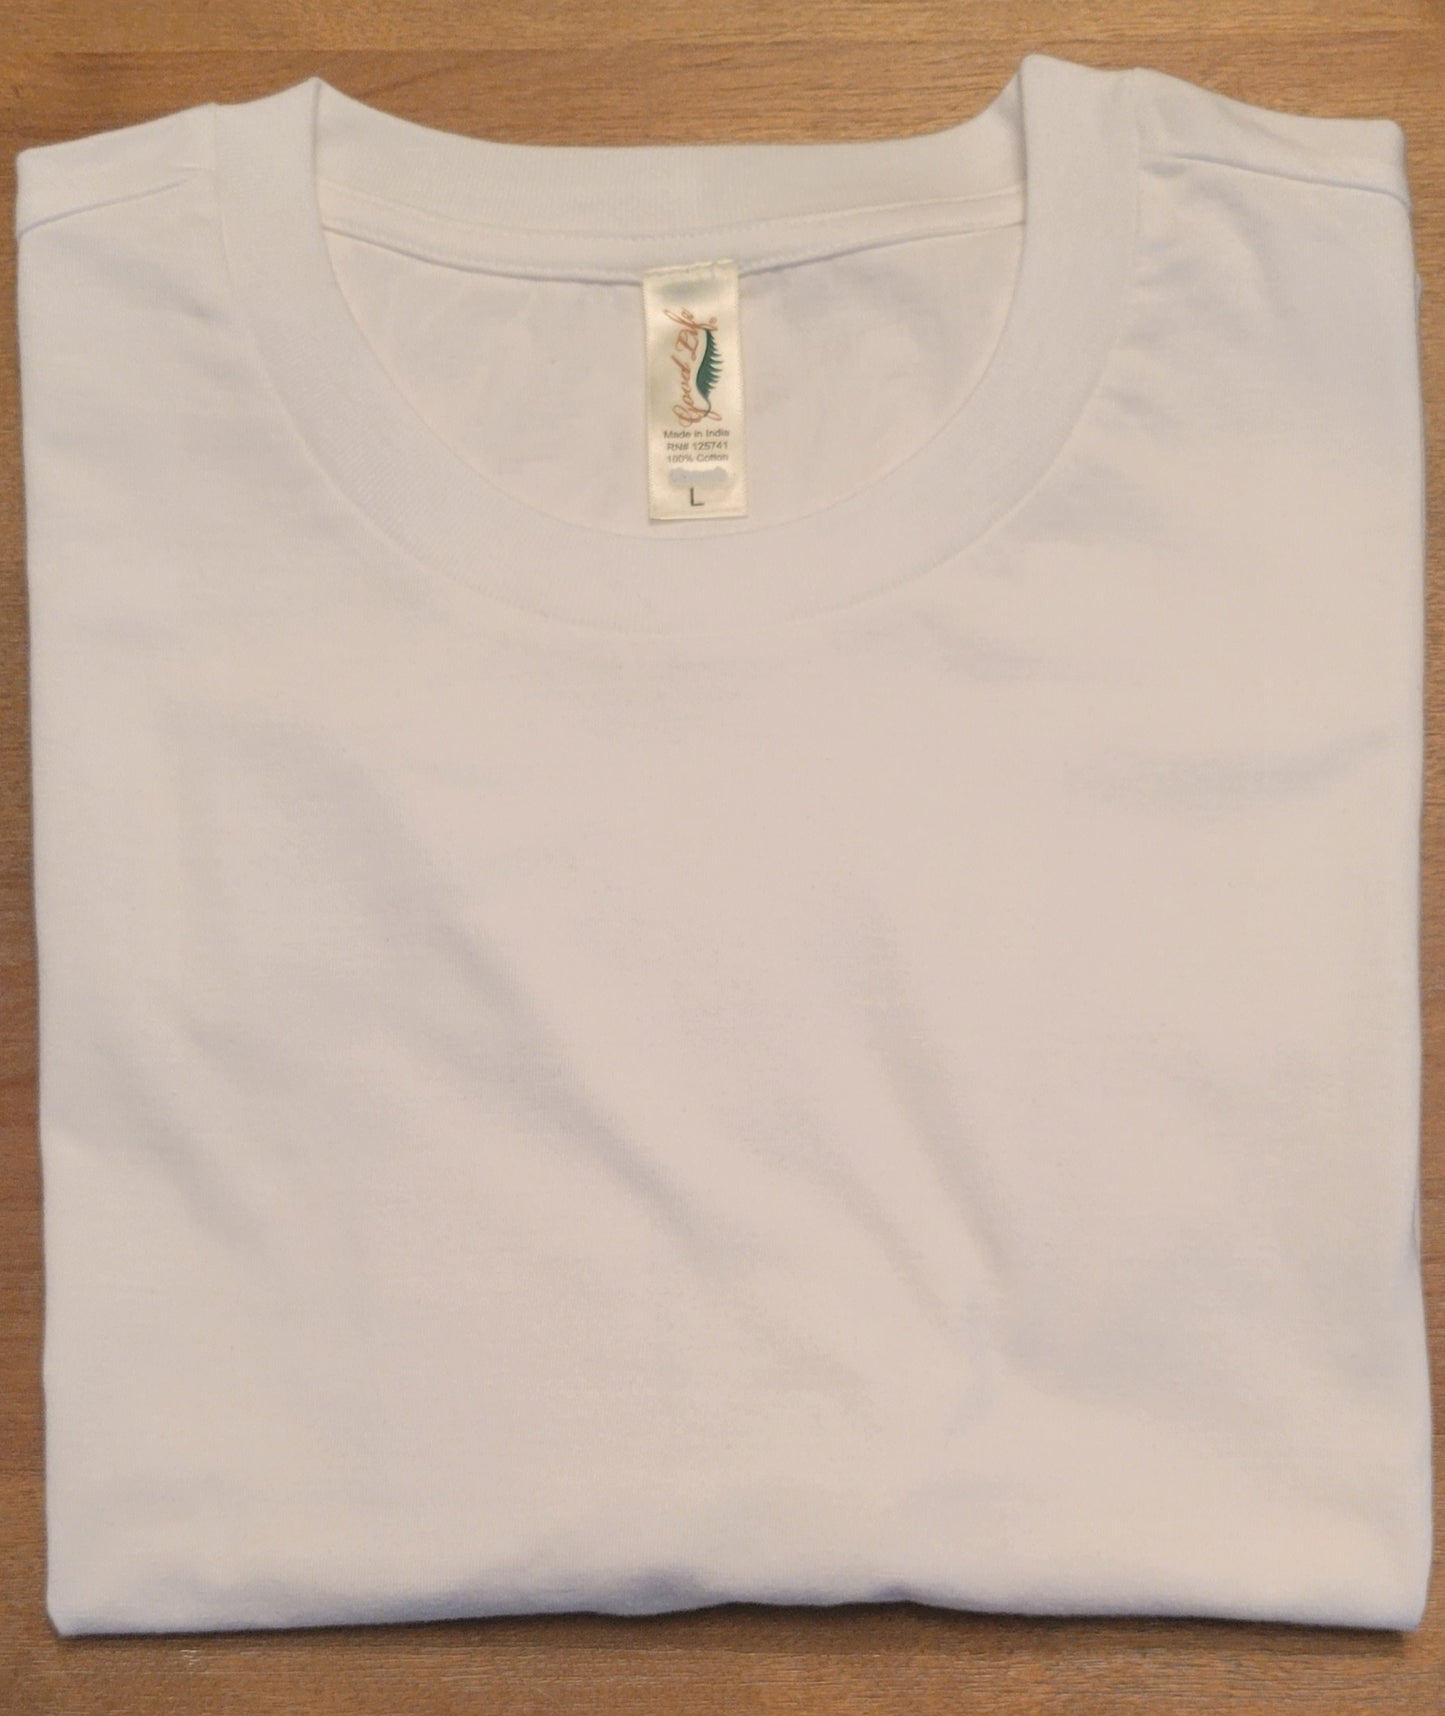 Private Label Manufacturer Bulk Mens Premium Heavy 100% Cotton 6.1 Ounce T-Shirt Bulk Wholesale Tees Hoodies USA Blank tee shirts Amazon FBA Reseller Seller Brand